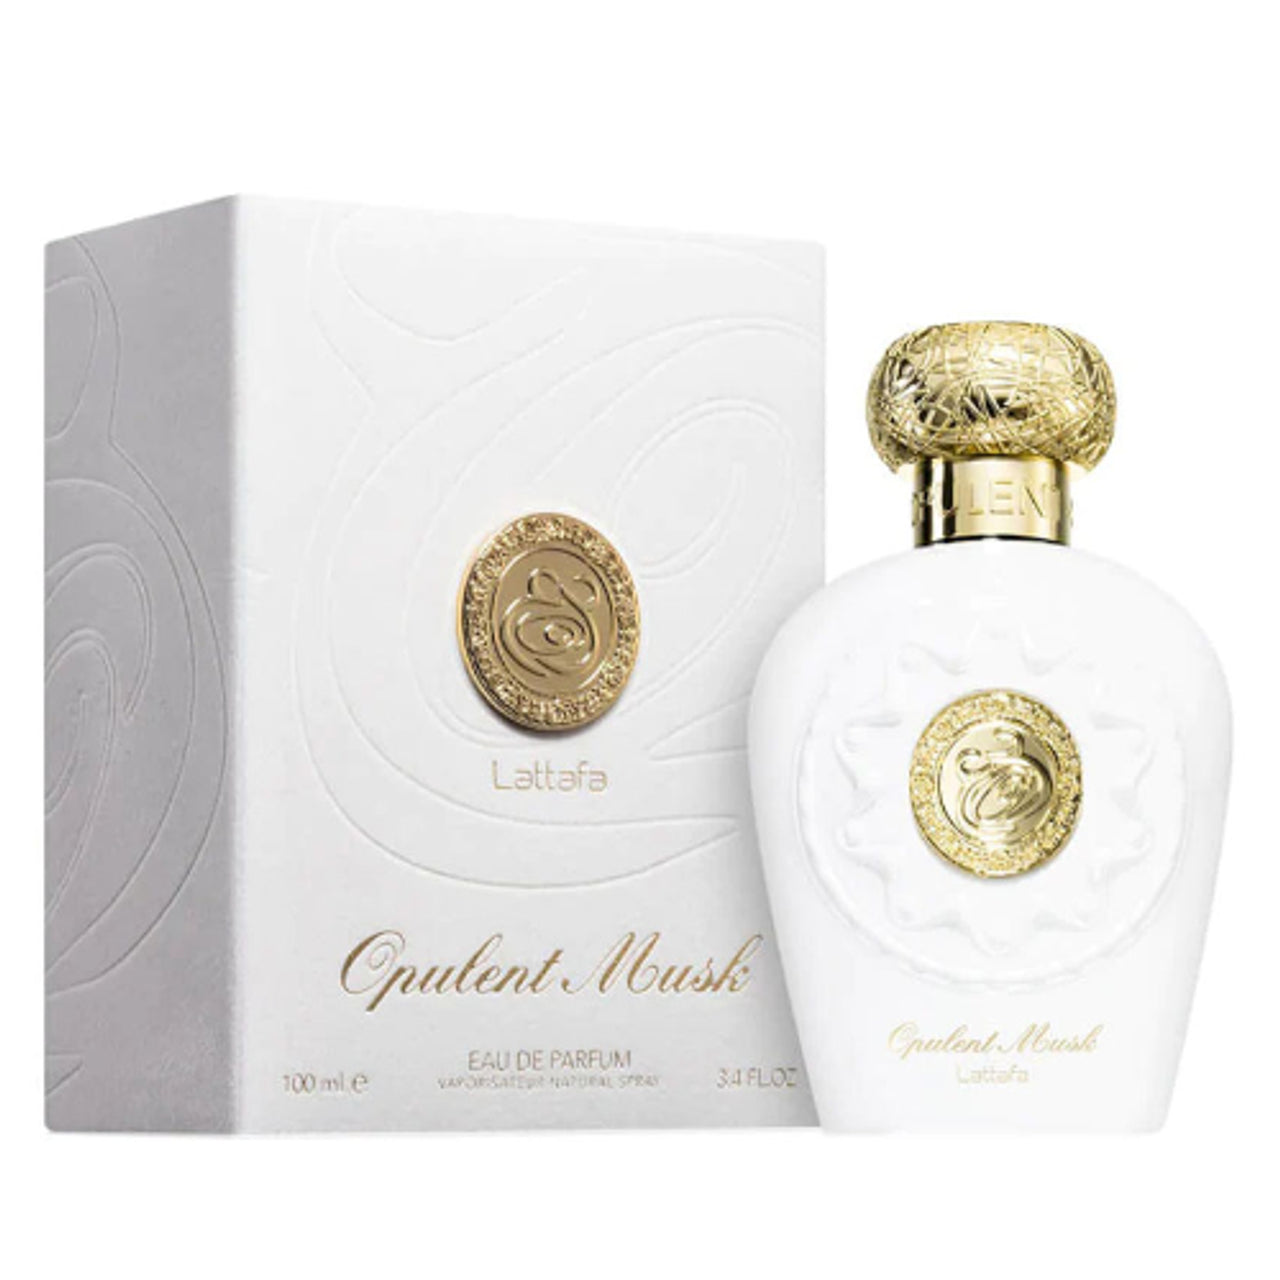 Parfums Opulent Musk de la marque Lattafa mixte 